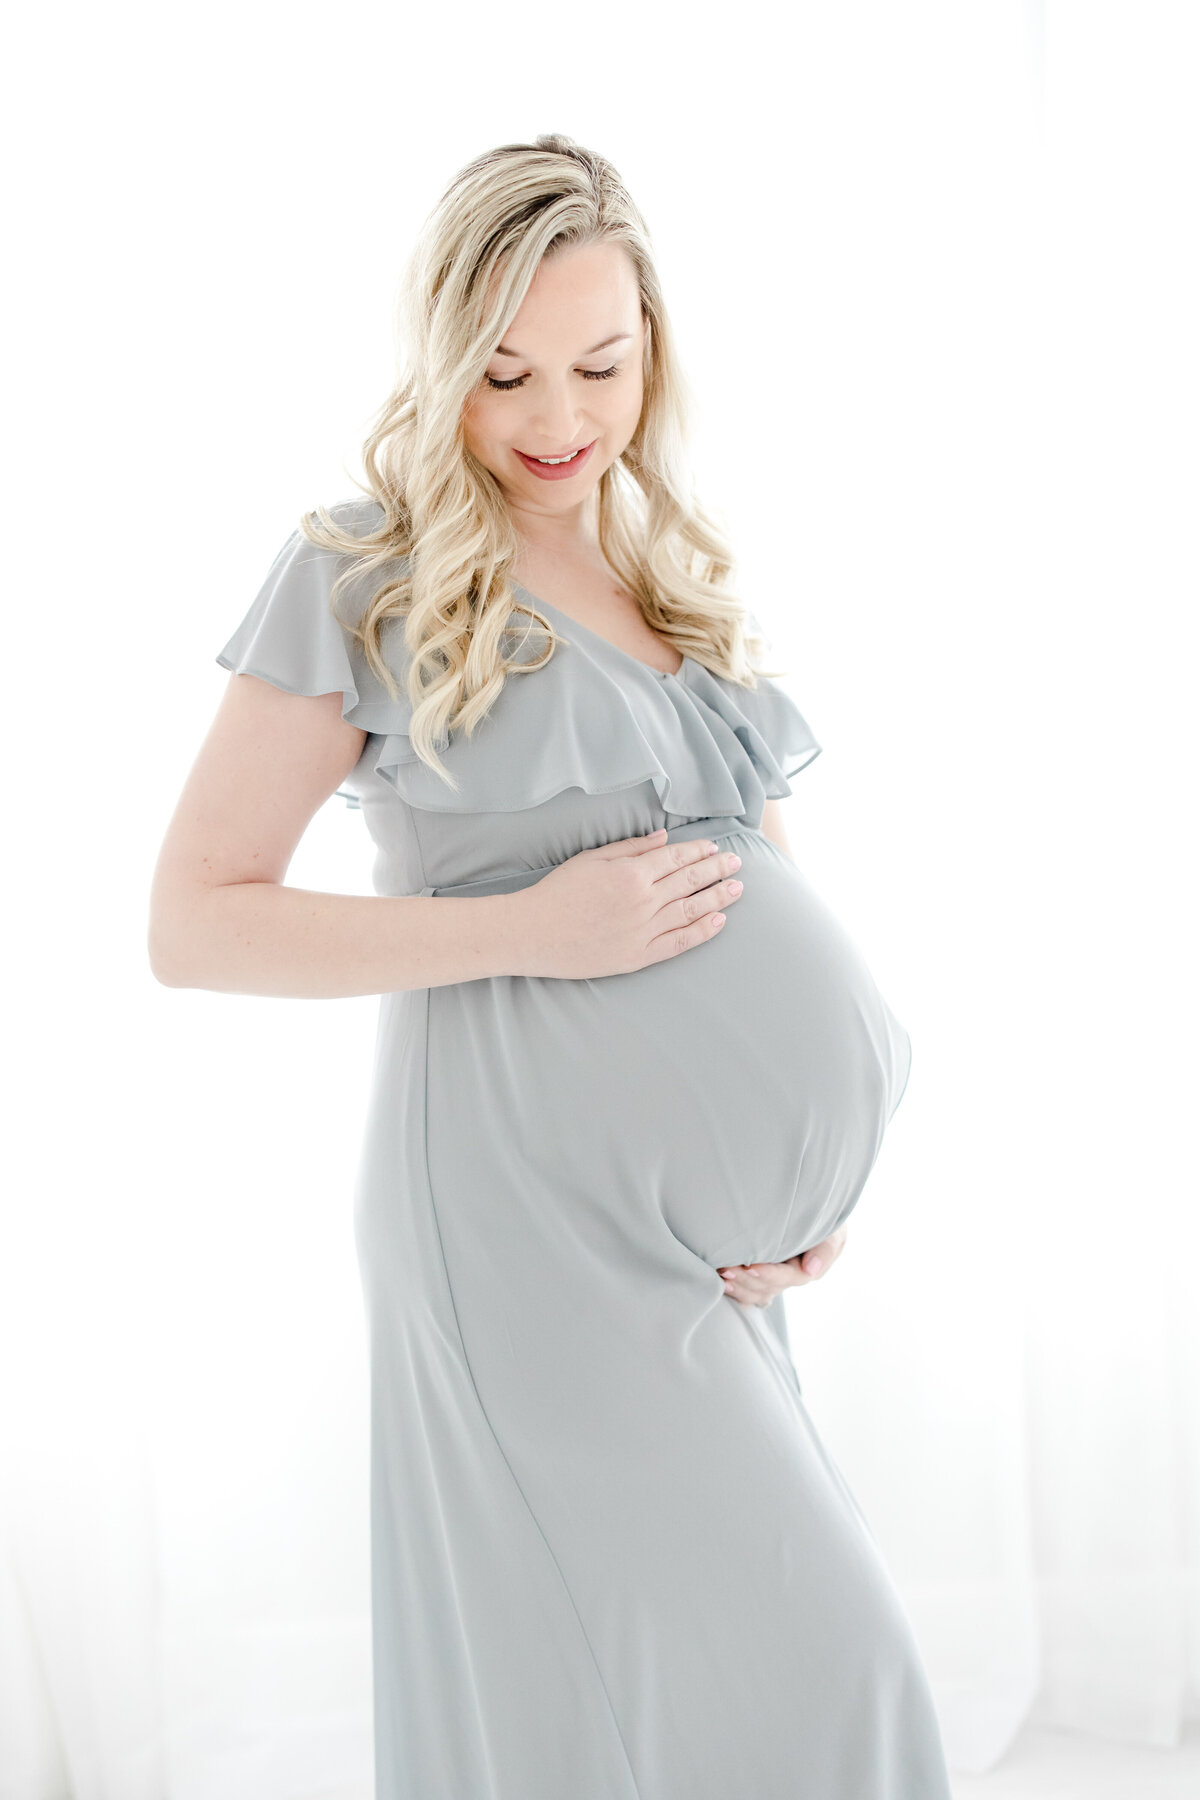 Westport CT Maternity Photographer - 45